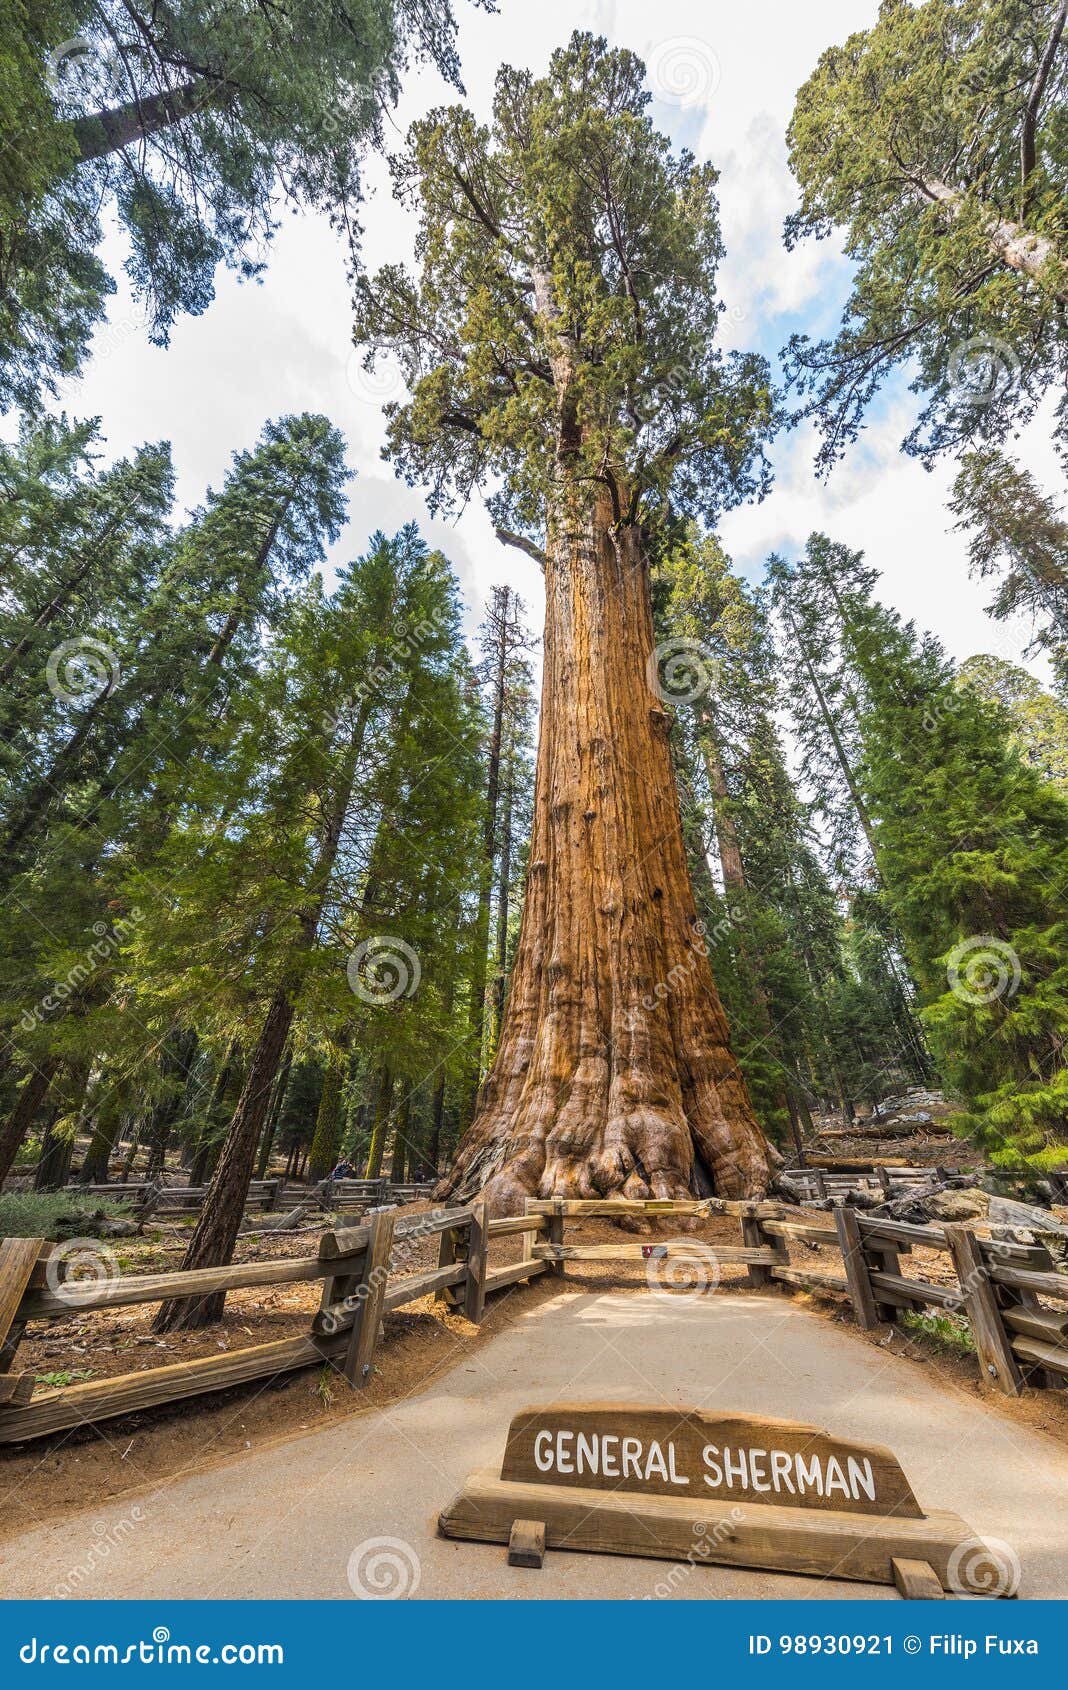 general sherman giant sequoia